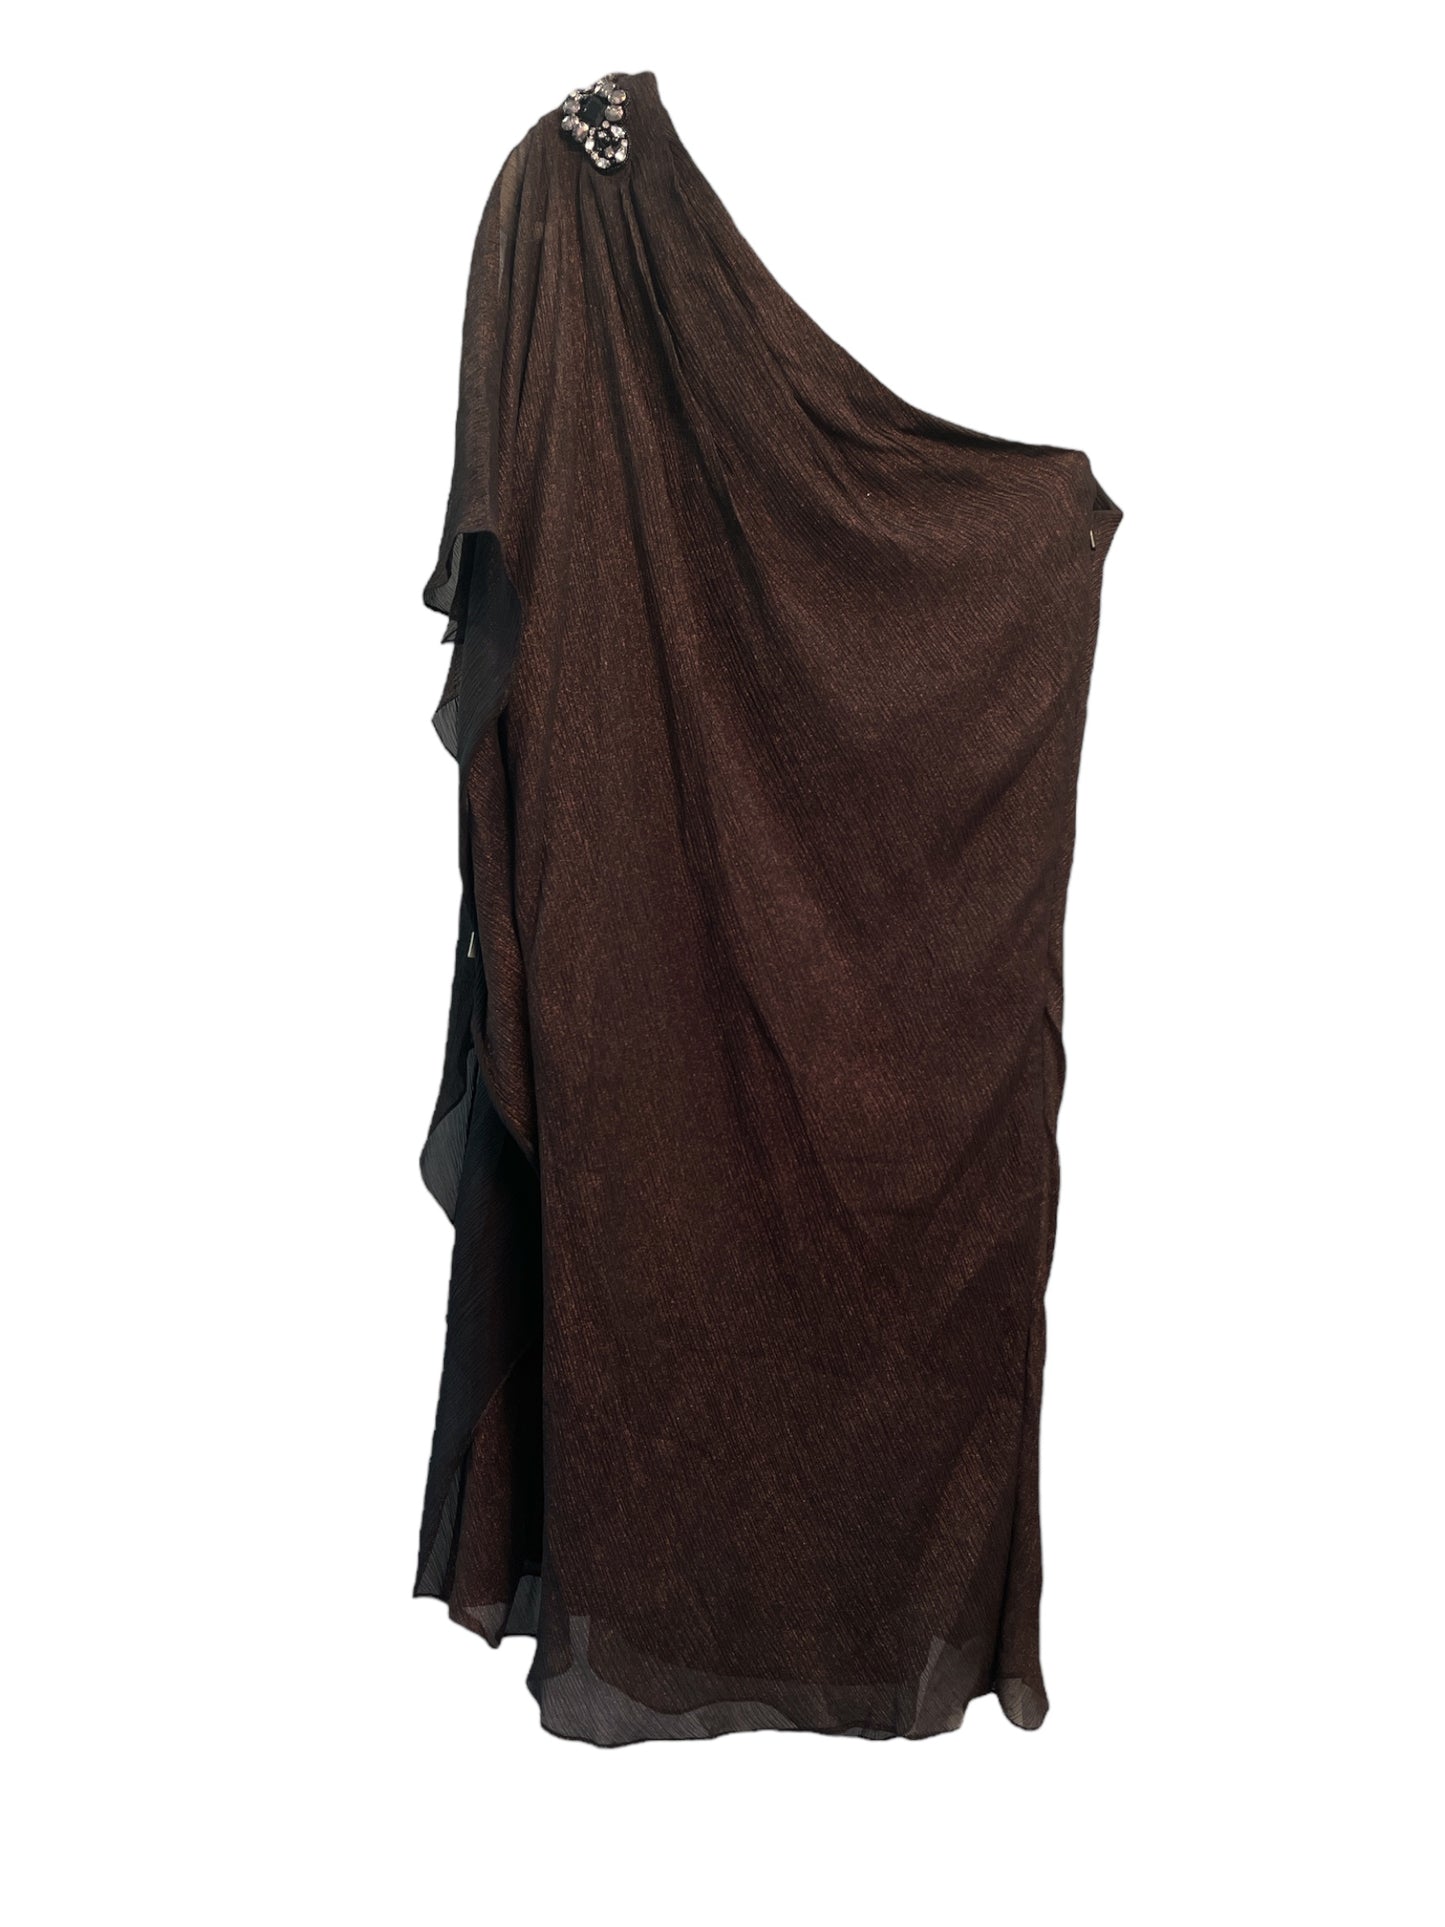 Bradley Mischka Bronze SILK One Shoulder Embellished Mini Dress Size 6 NWT